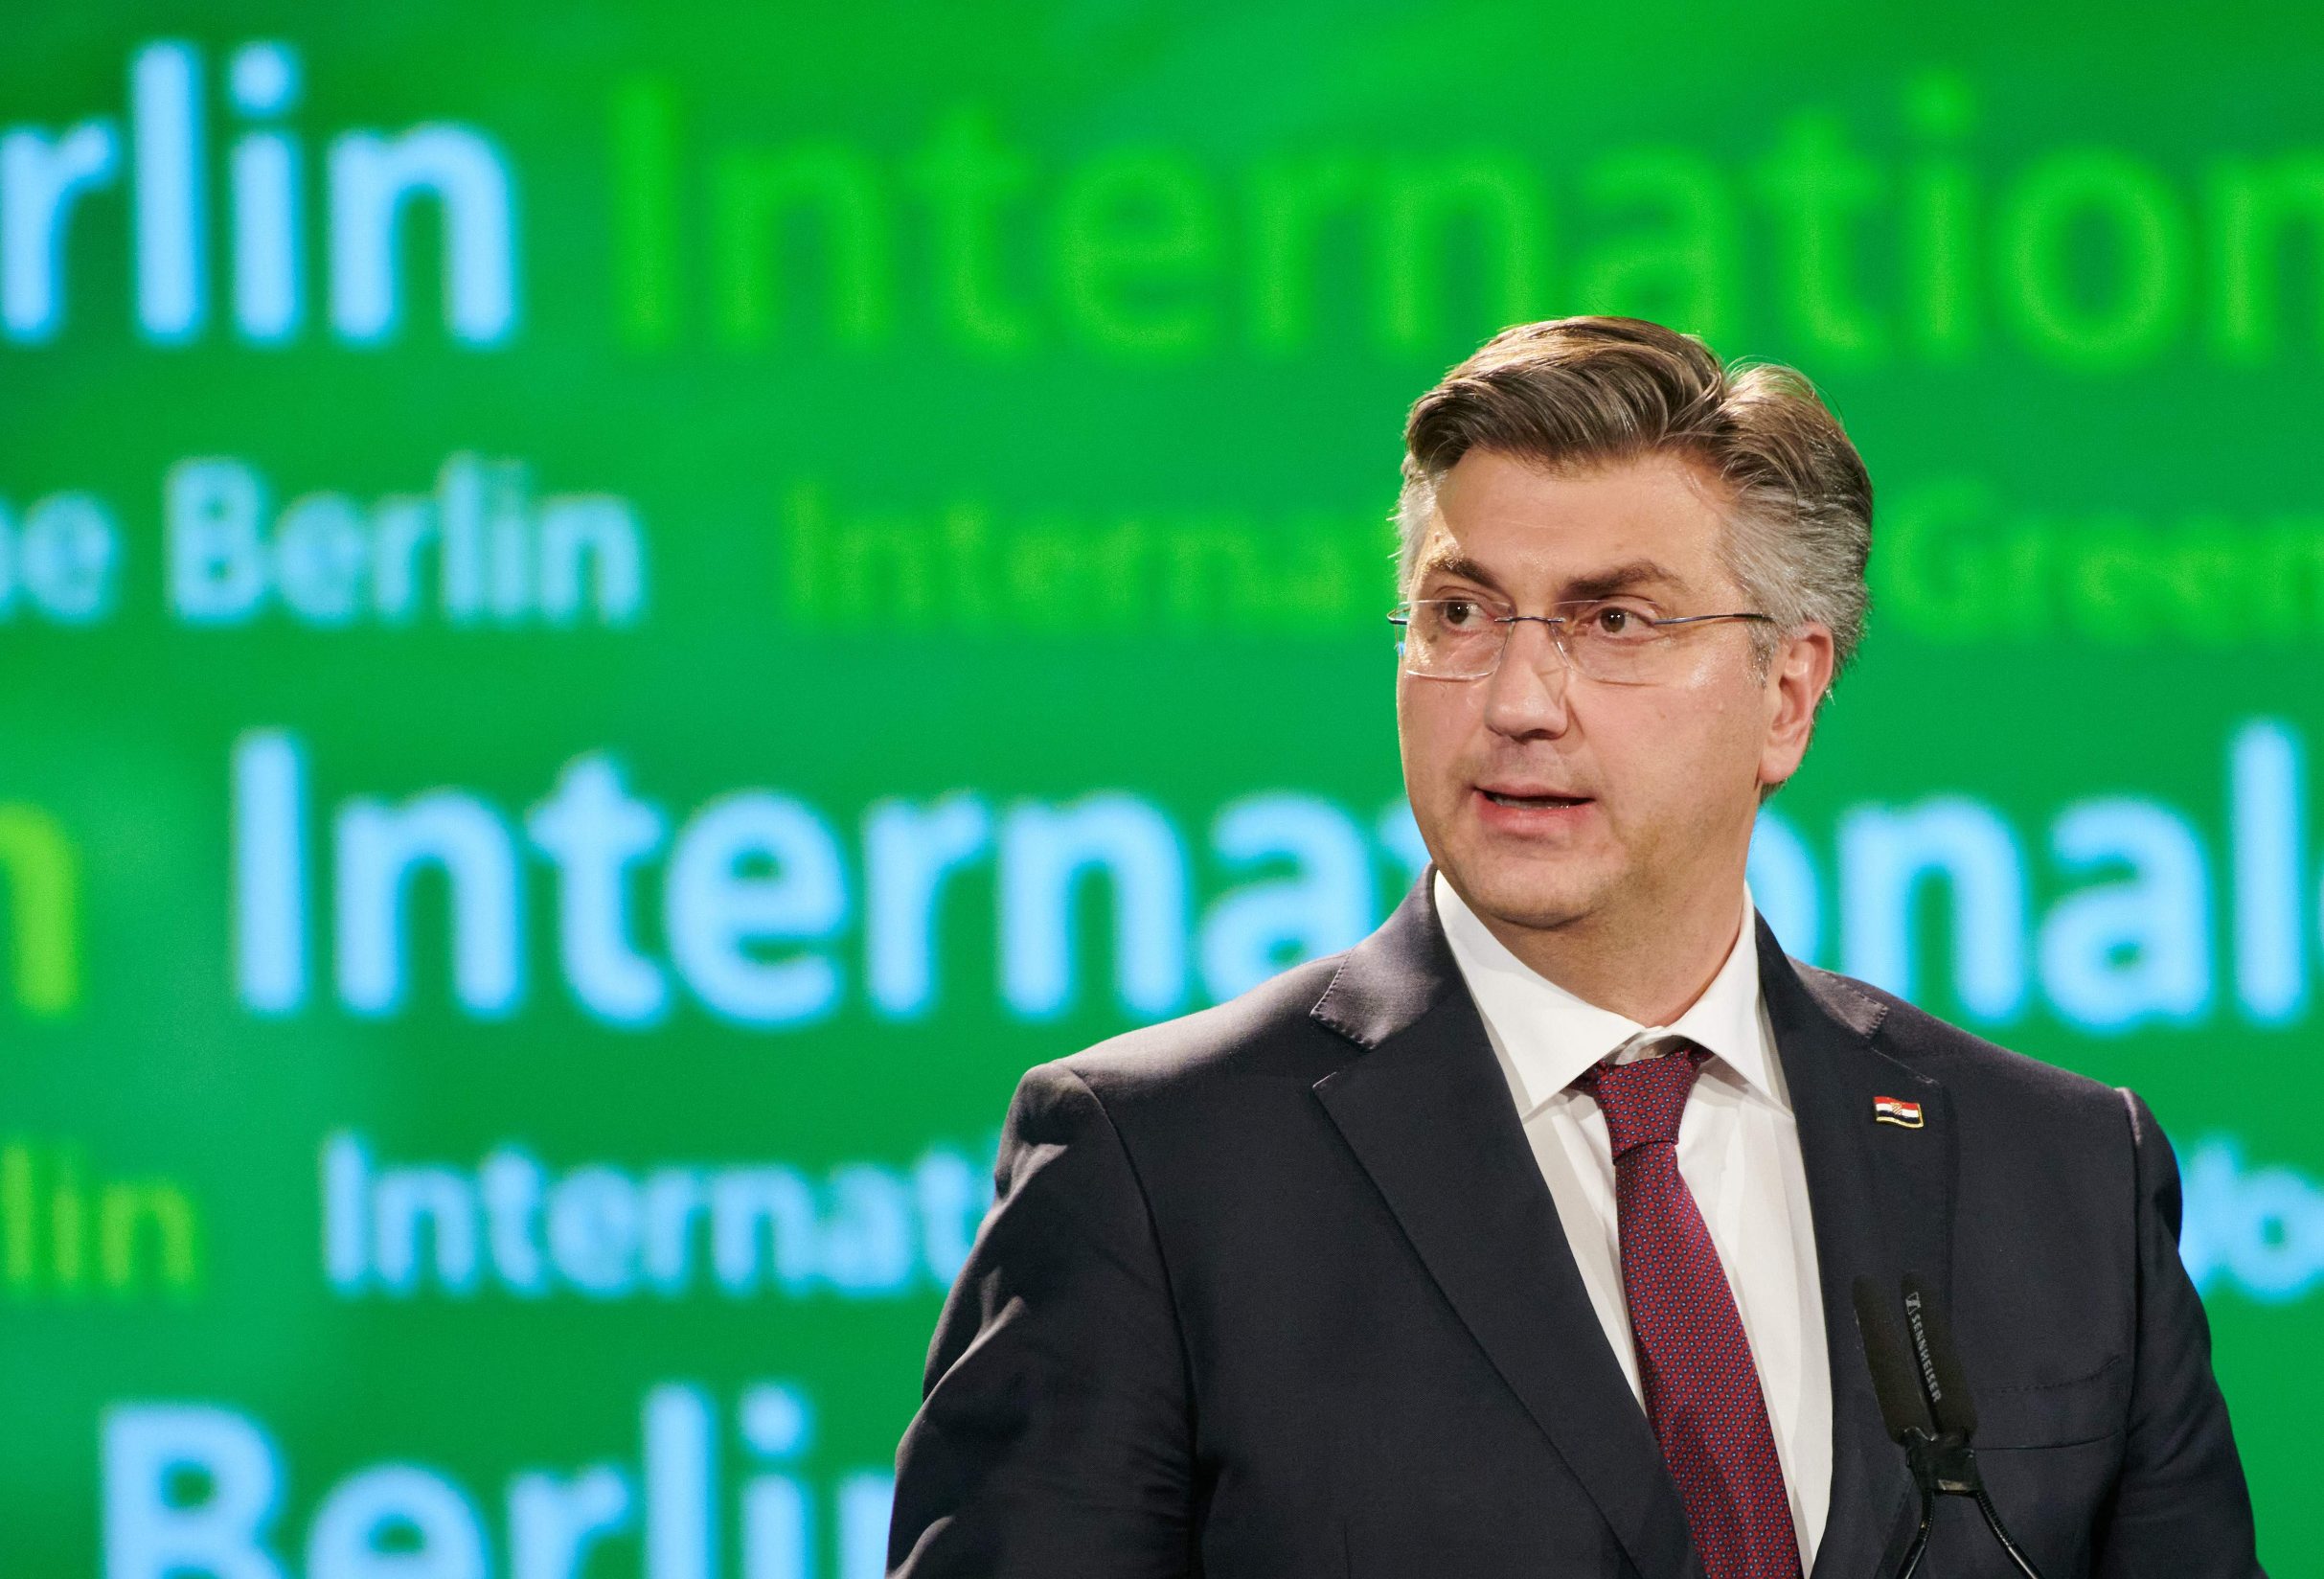 Predsjednik vlade RH Andrej Plenković prilikom uvodnog govora na Berlinskom Zelenom sajmu